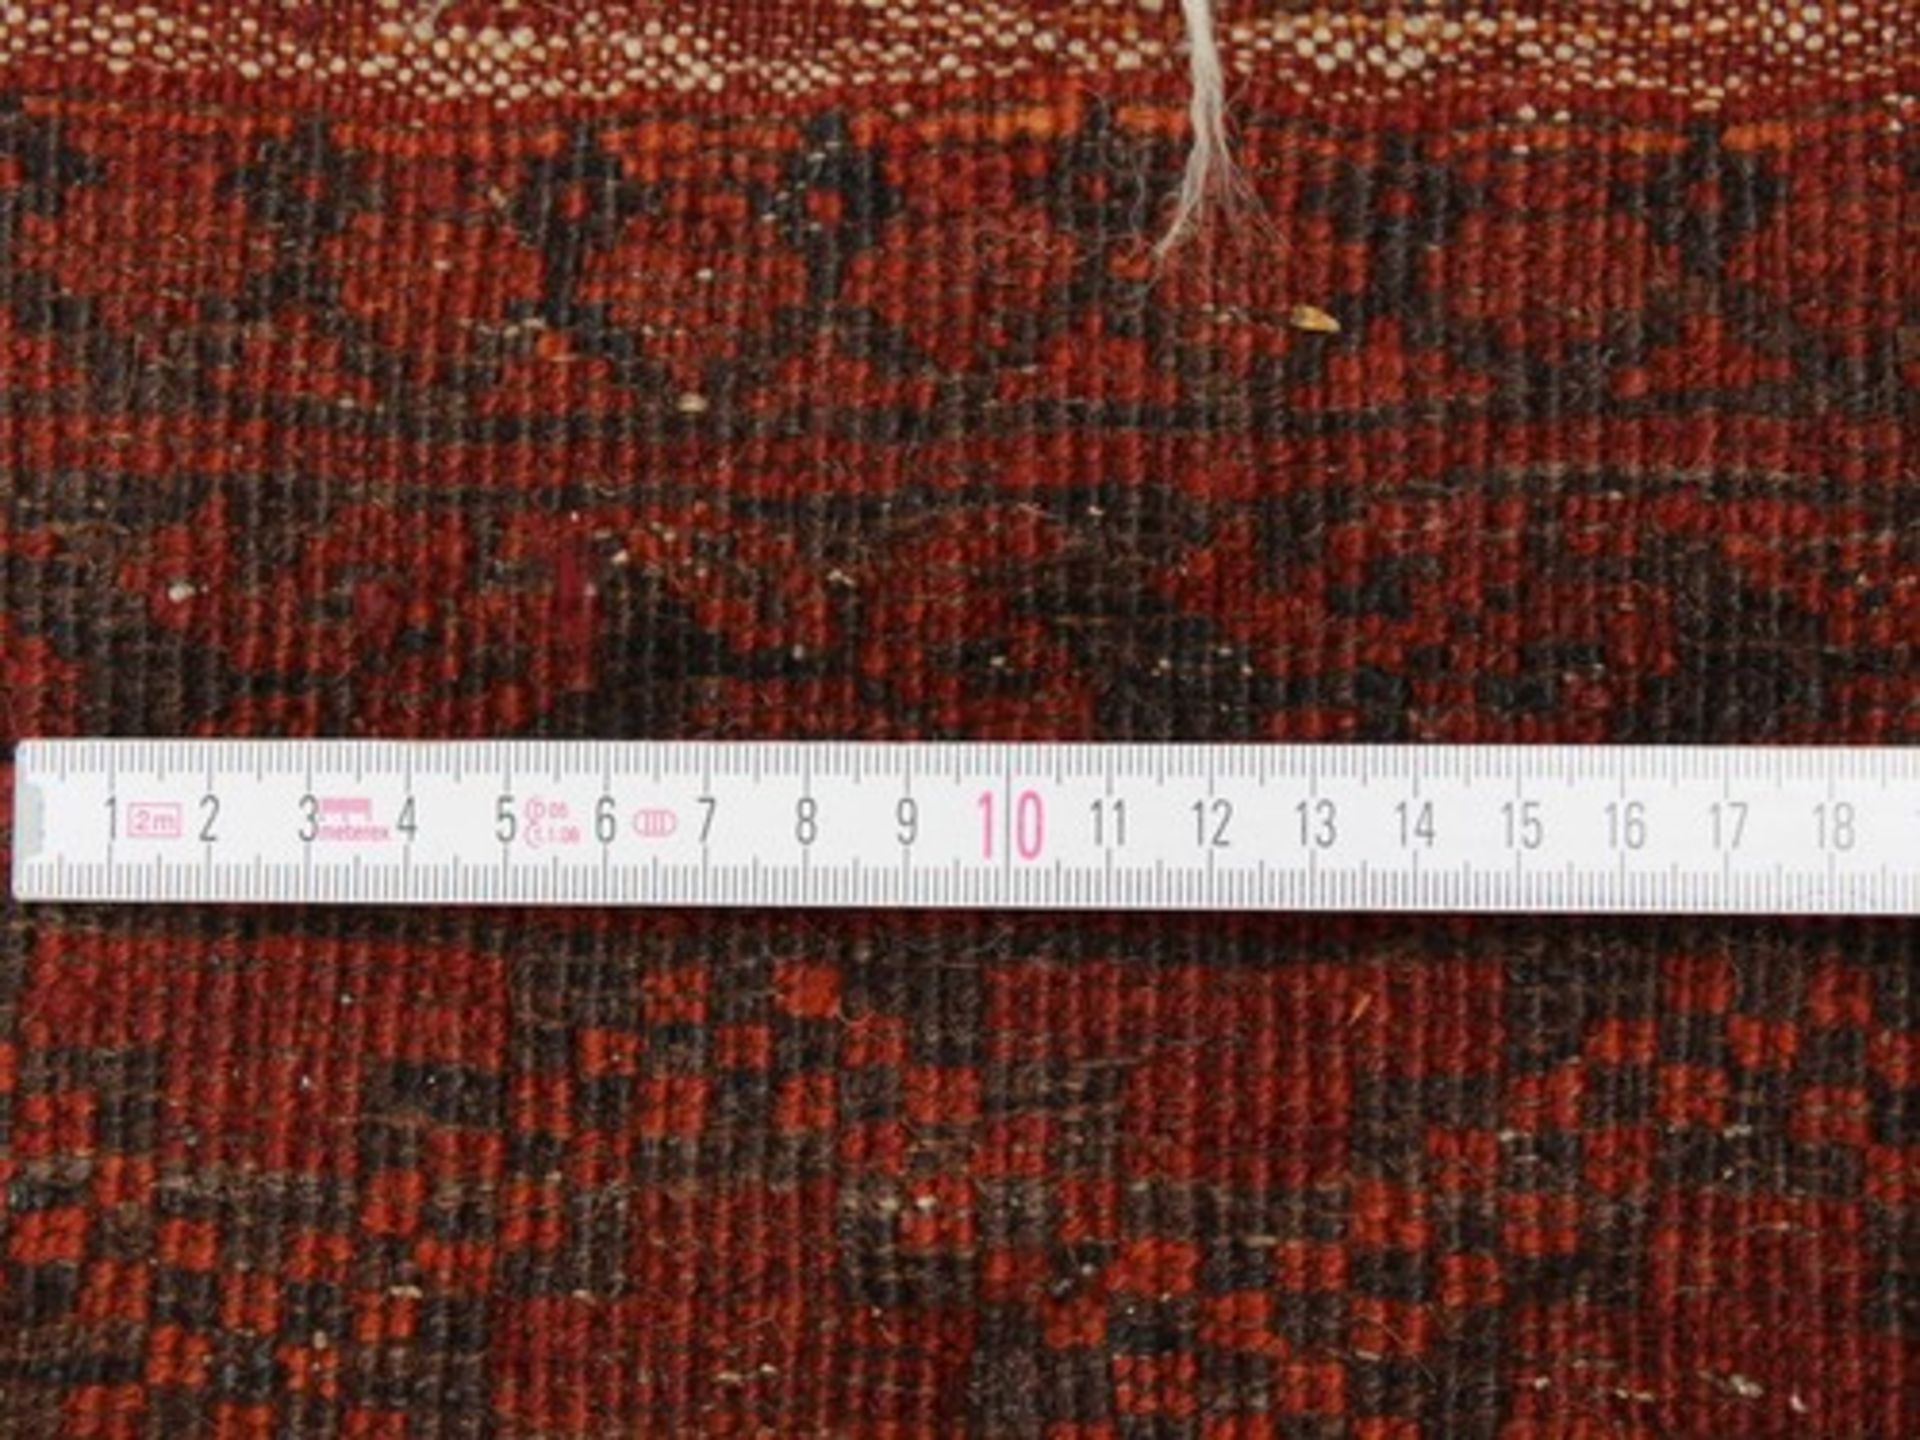 OrientteppichAfghanistan, Wolle/Wolle, hoher Flor, rot/gold, schwarz, mehrfach Bordüre, im Feld 2 - Image 2 of 8